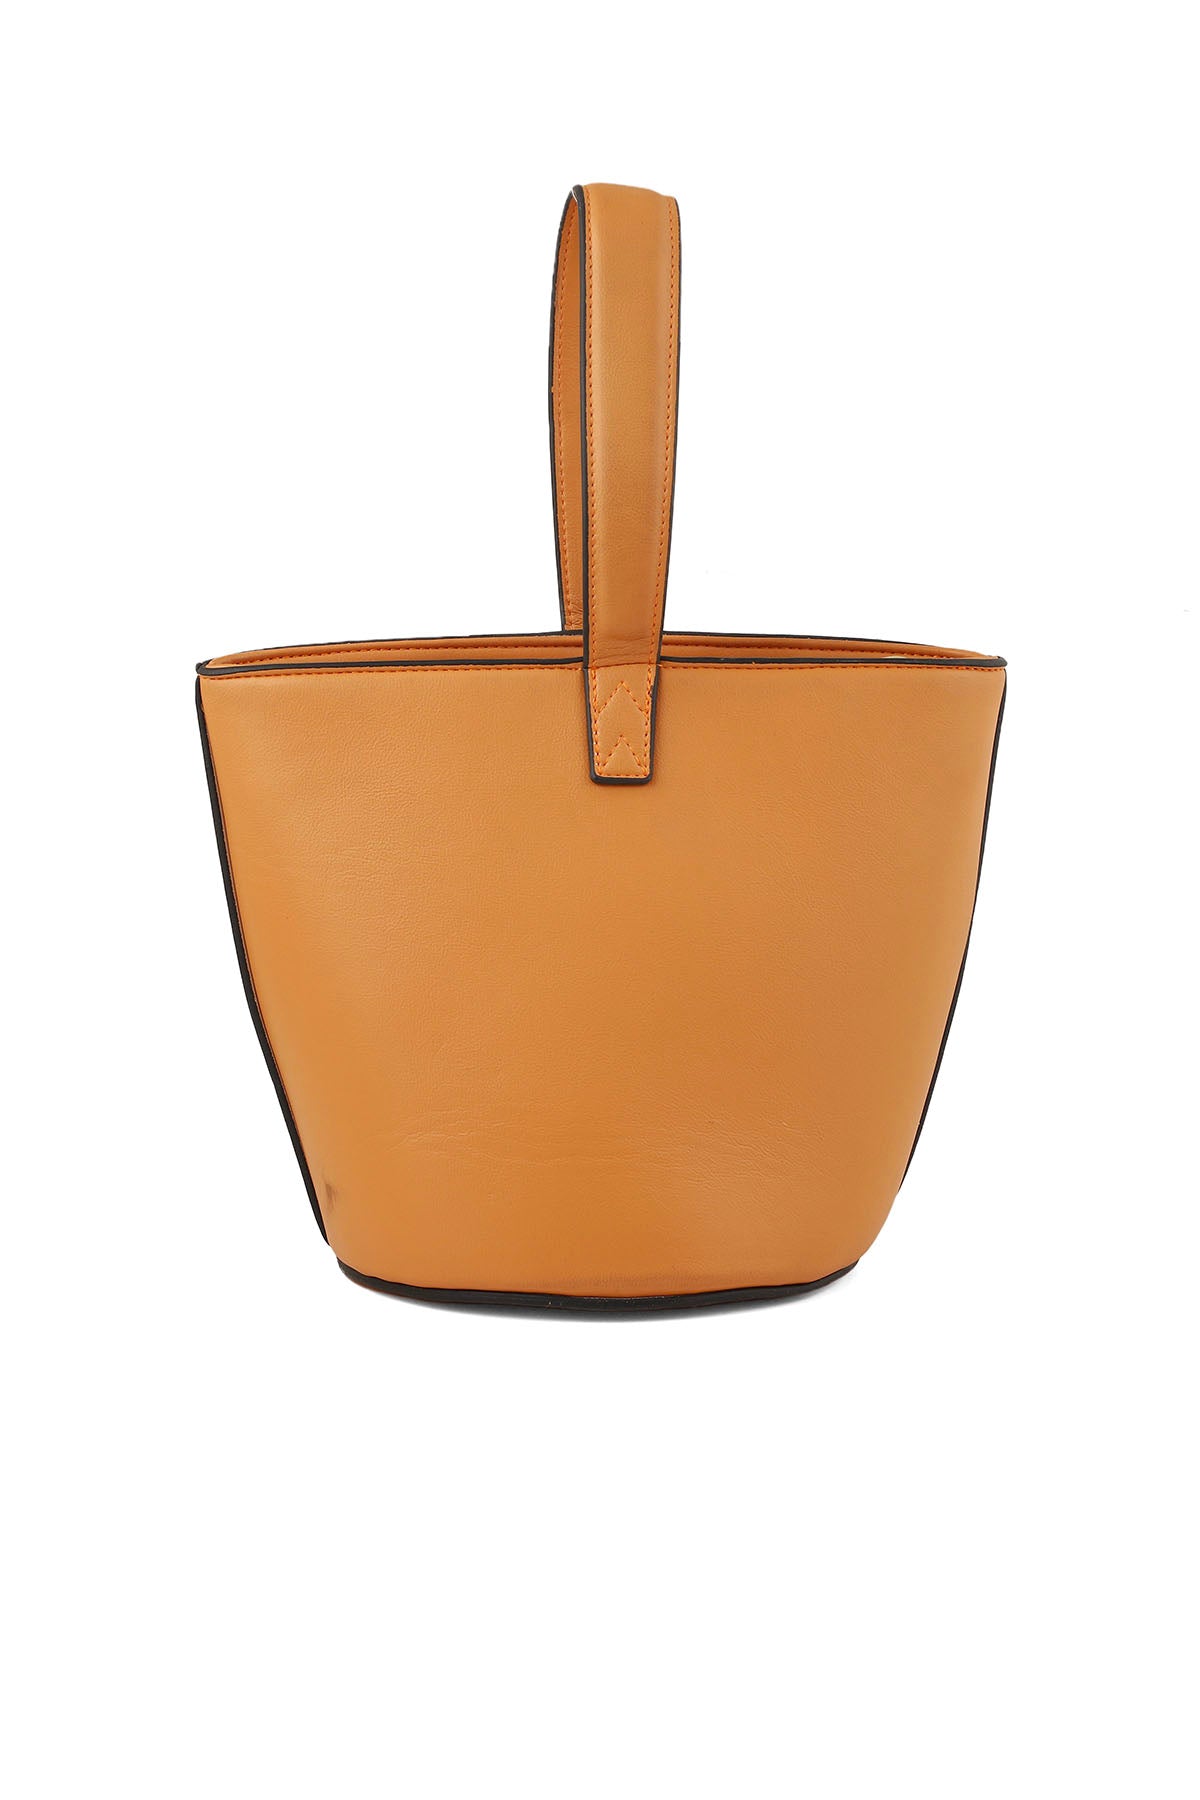 Bucket Hand Bags B21453-Orange